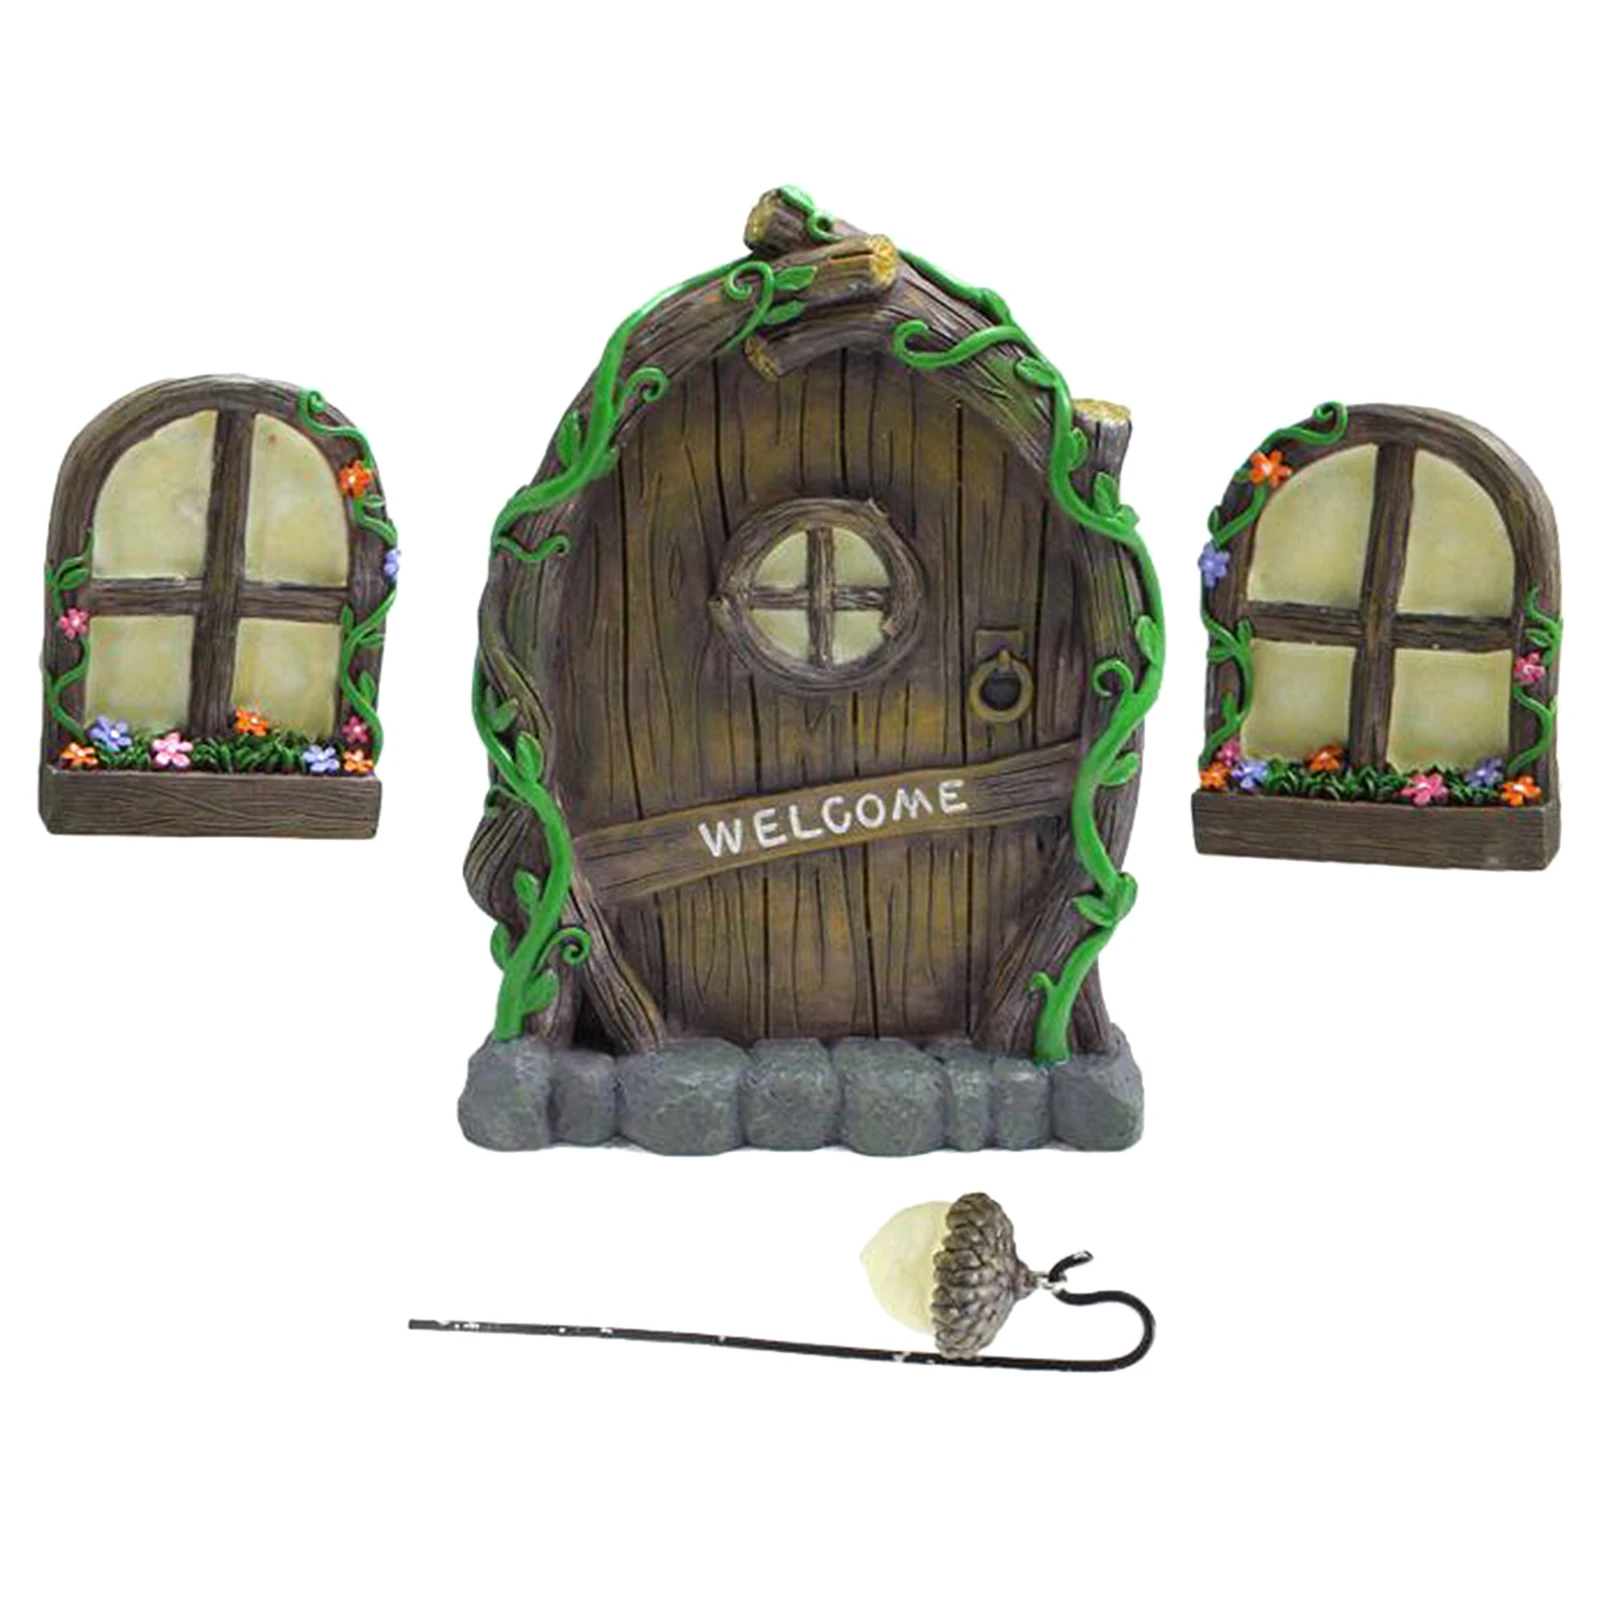 4pcs/set Cute Miniature Fairy Garden Window Door Elf Home for Art Garden Sculpture Decoration Wall and Trees